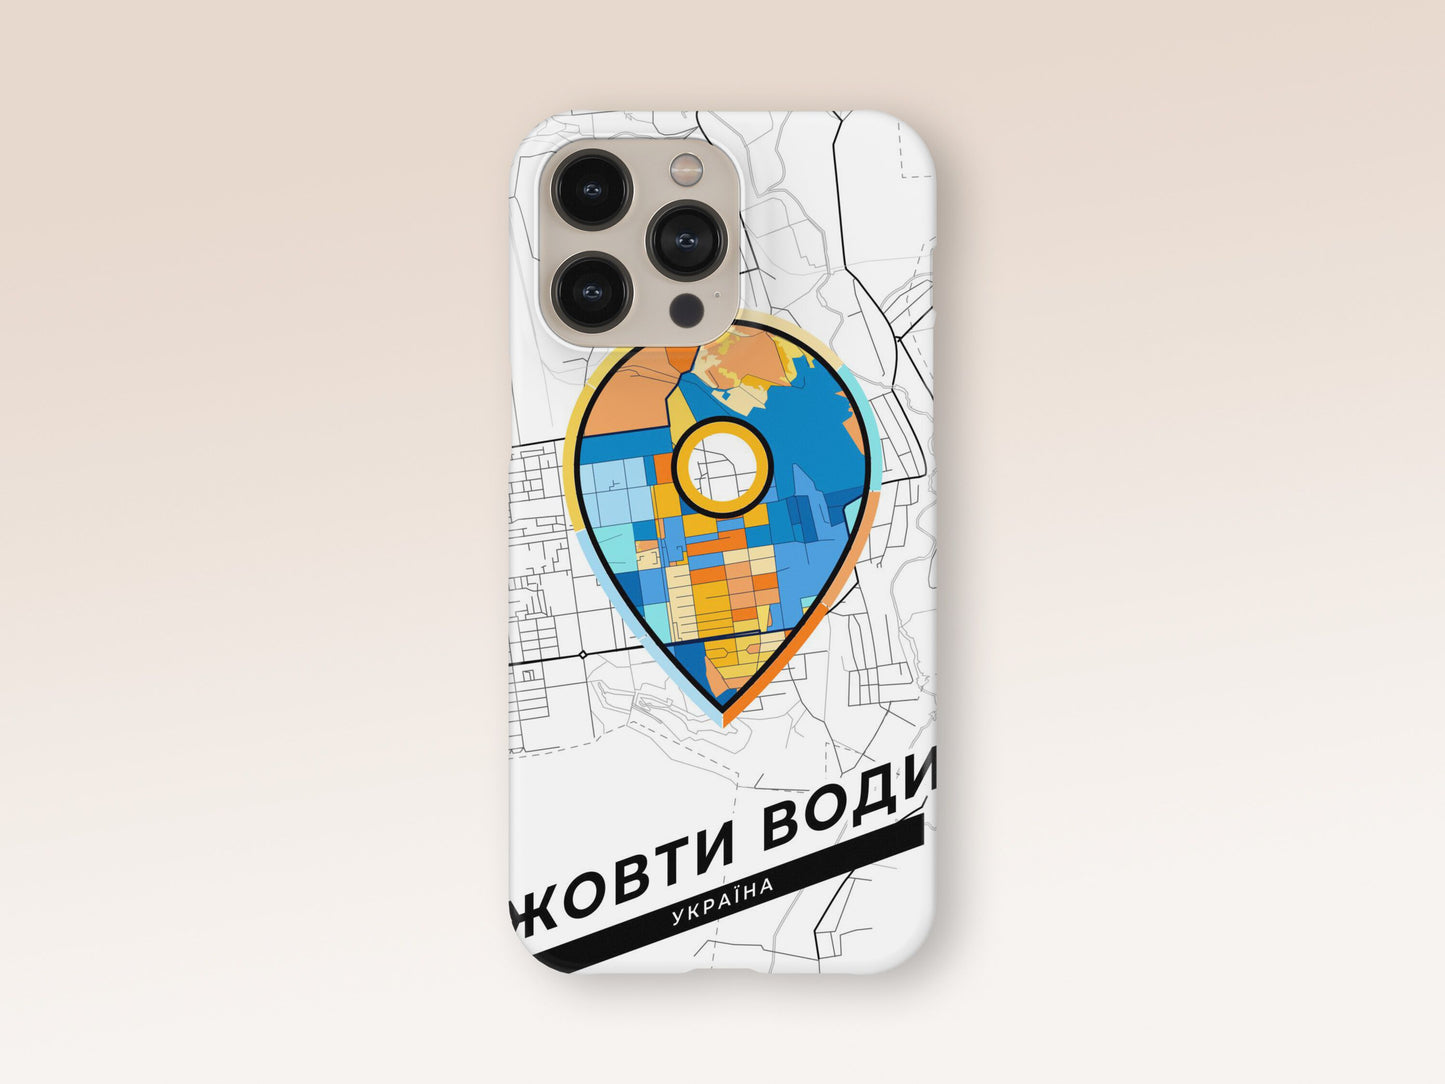 Zhovti Vody Ukraine slim phone case with colorful icon 1